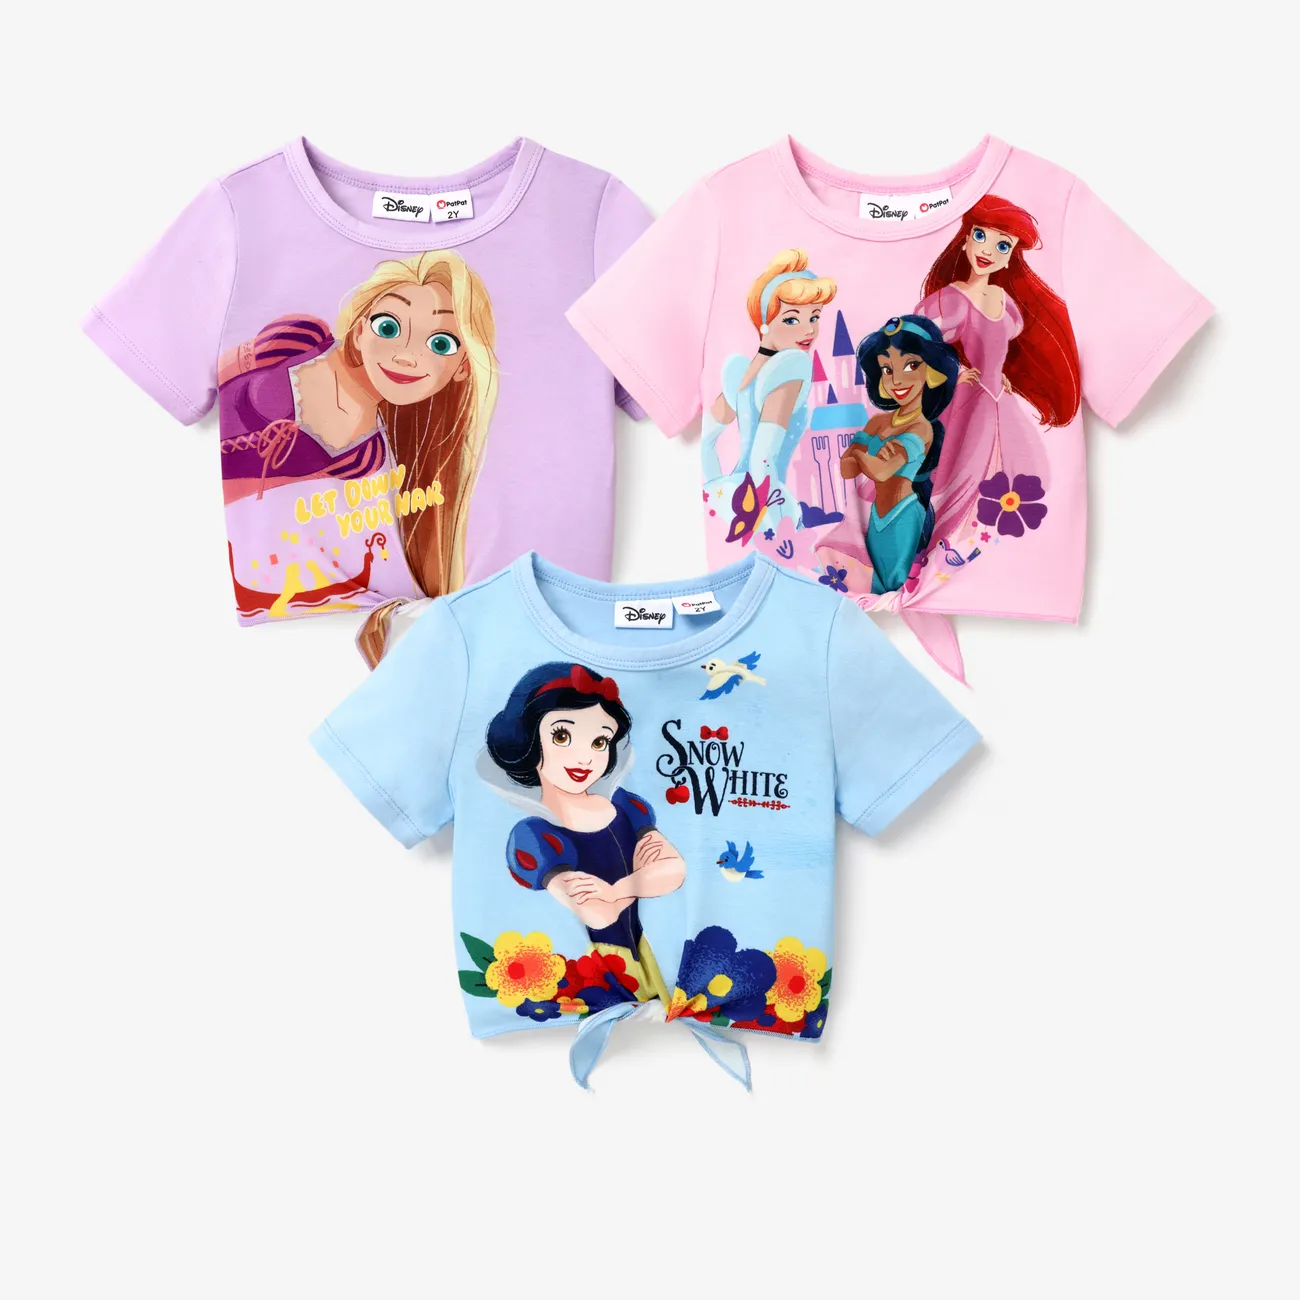 Disney Princess Niño pequeño Chica Con encaje Infantil Manga larga Camiseta Rosado big image 1